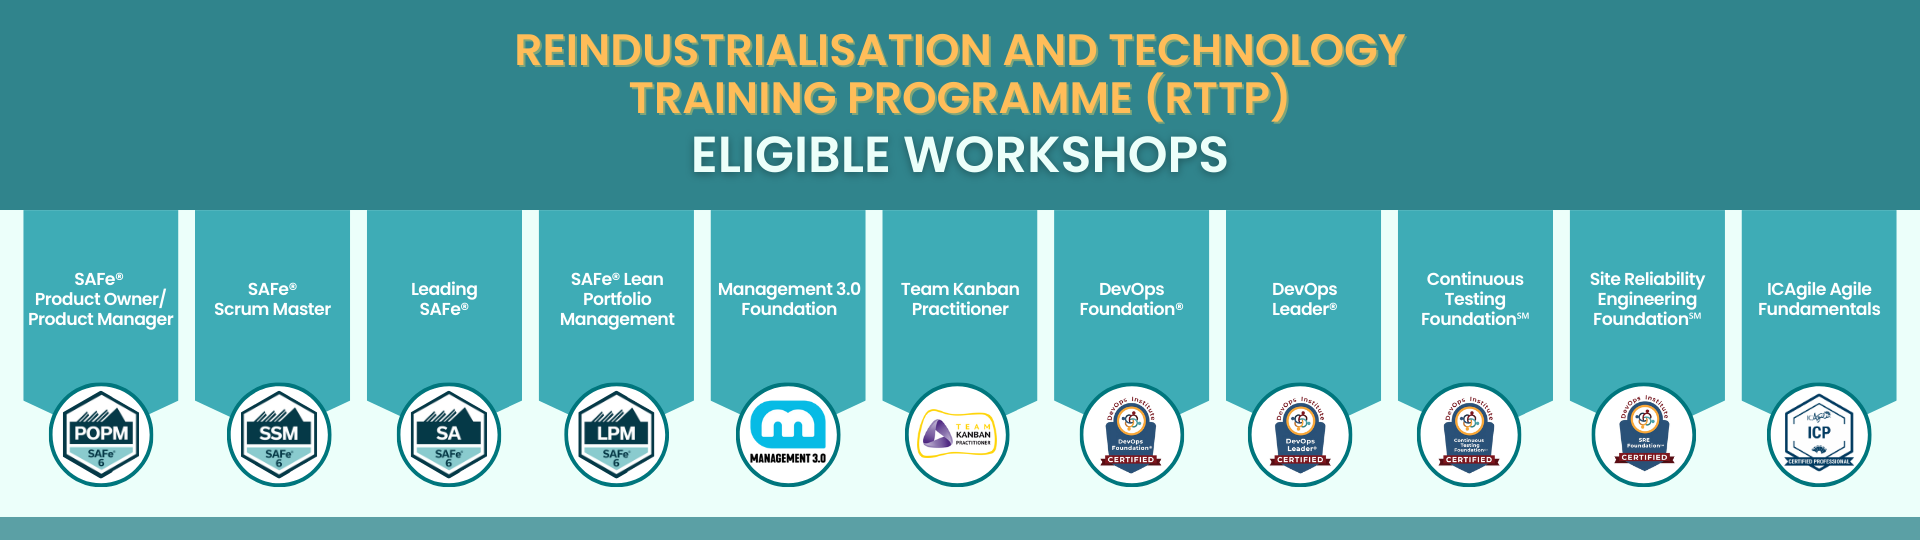 RTTP_Eligible_Workshops